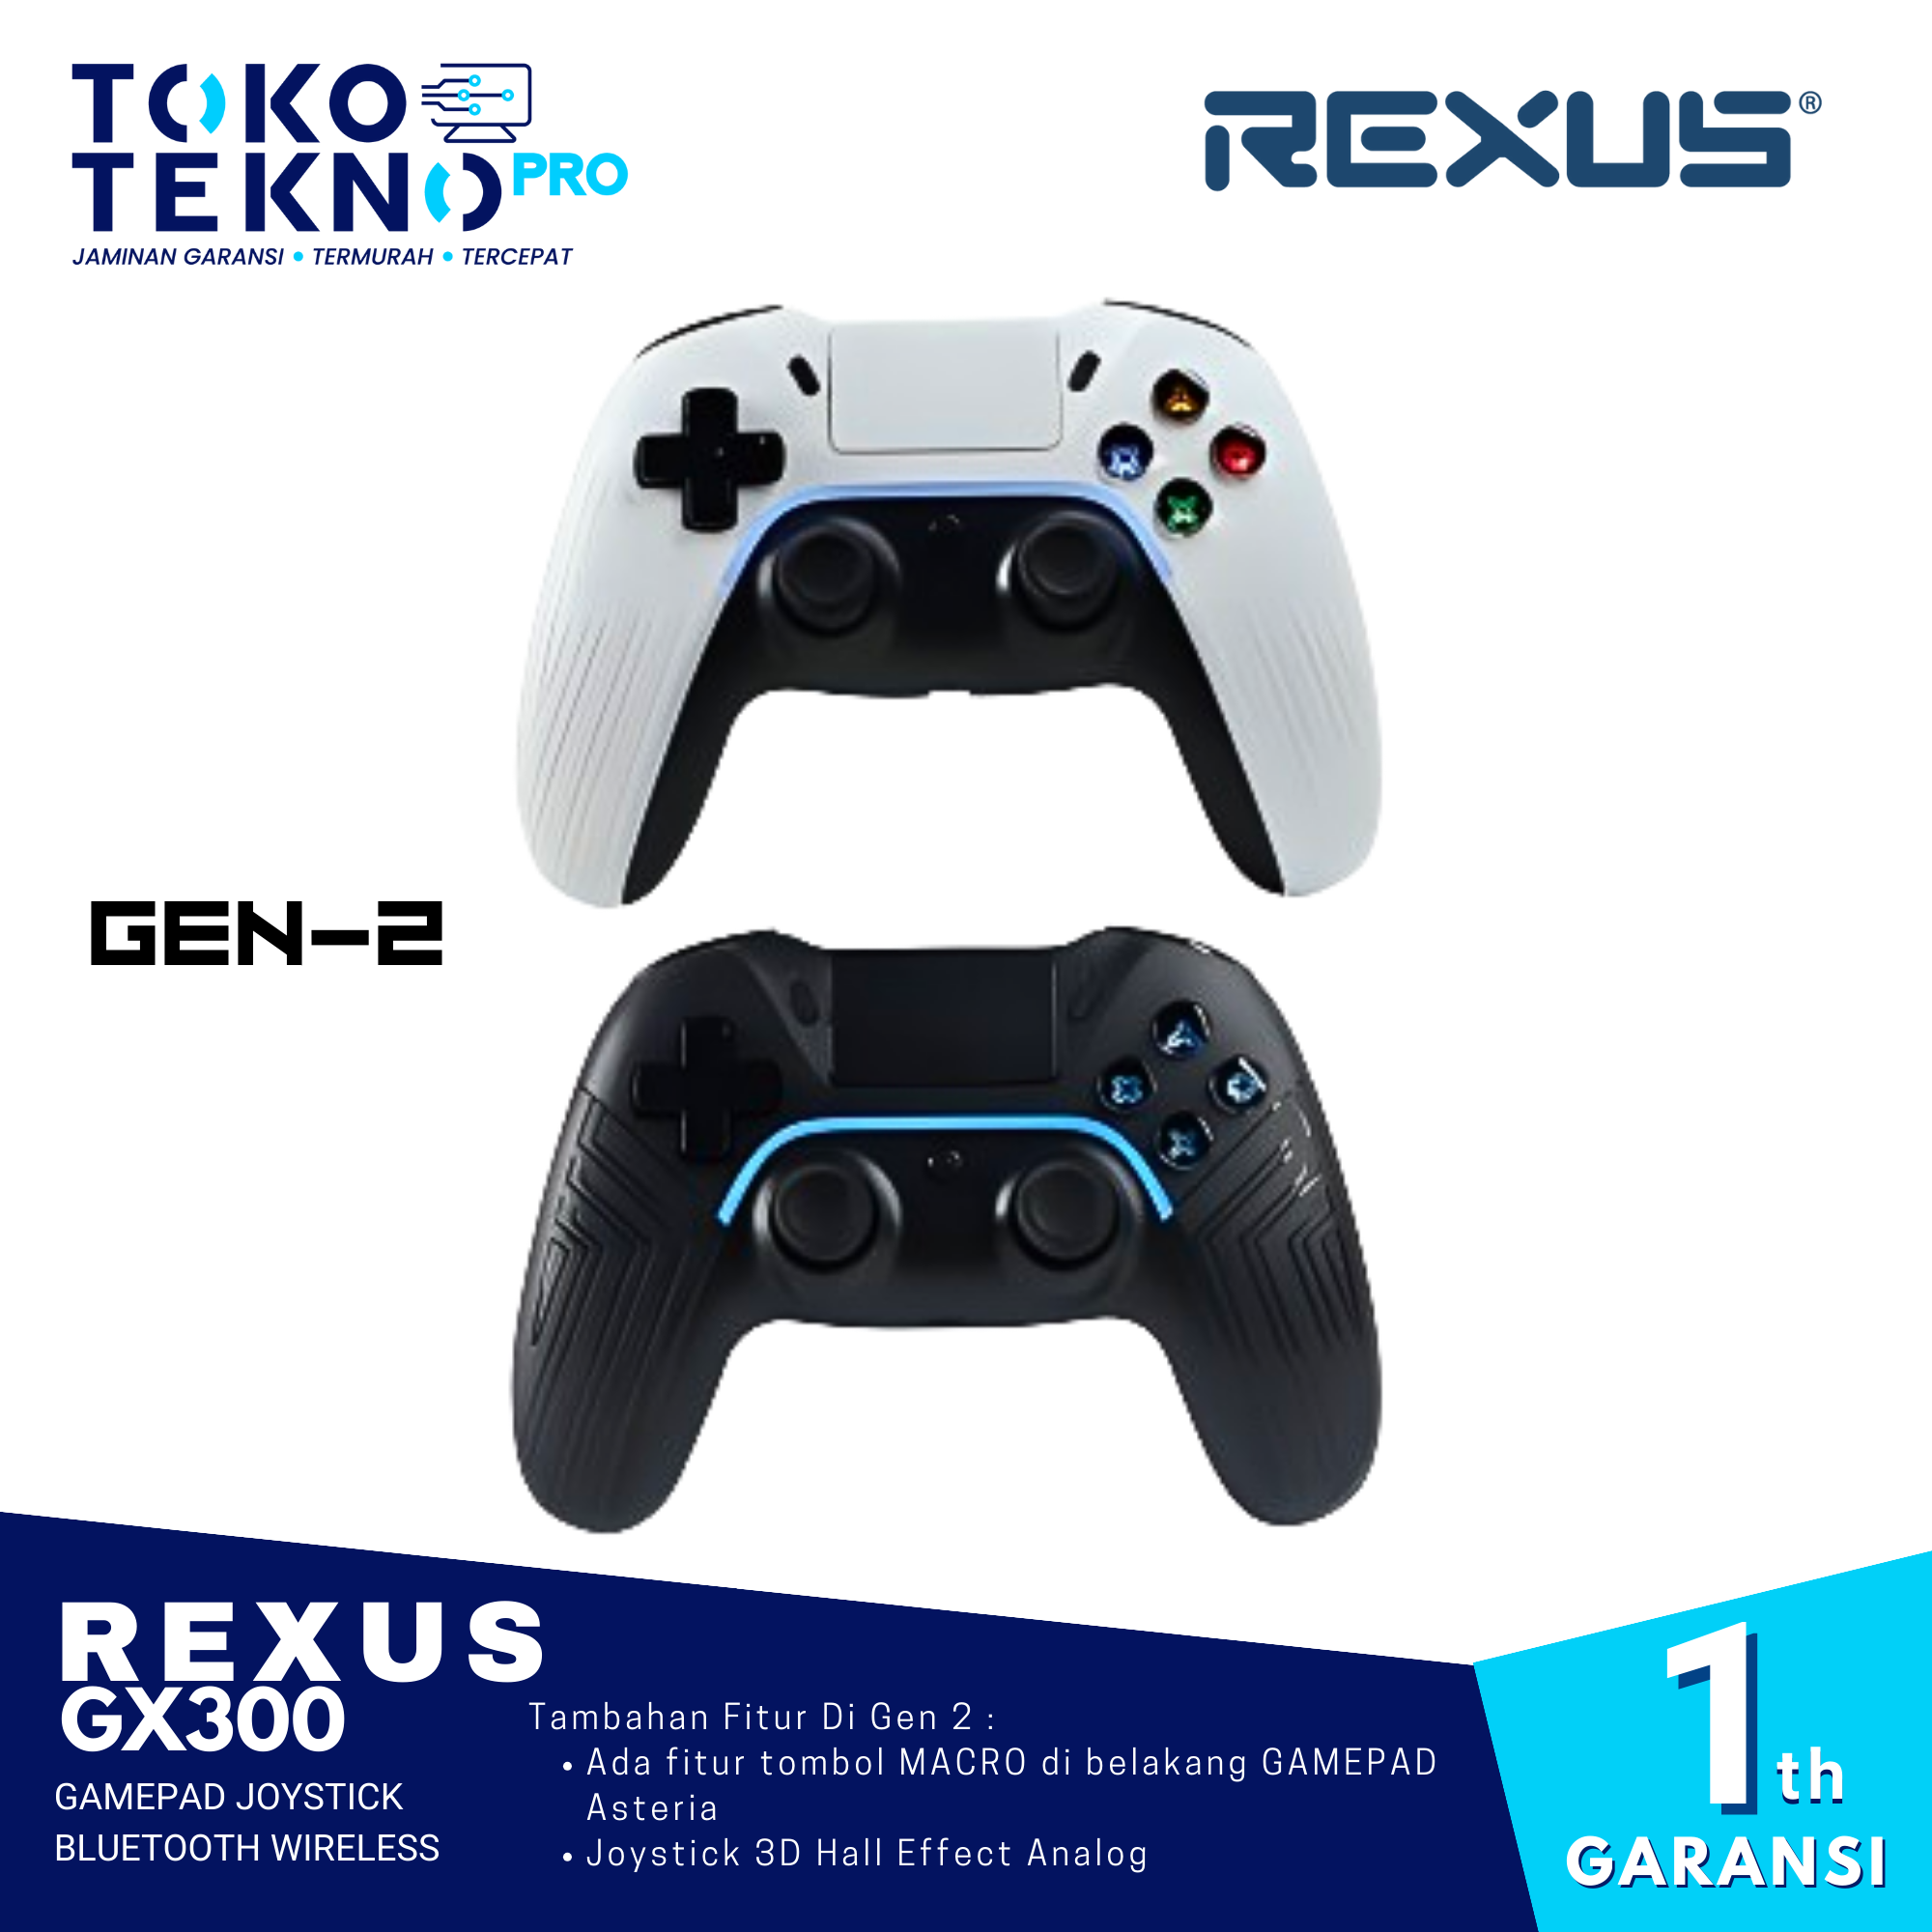 Rexus GX300 / GX-300 Gamepad Joystick Bluetooth Wireless